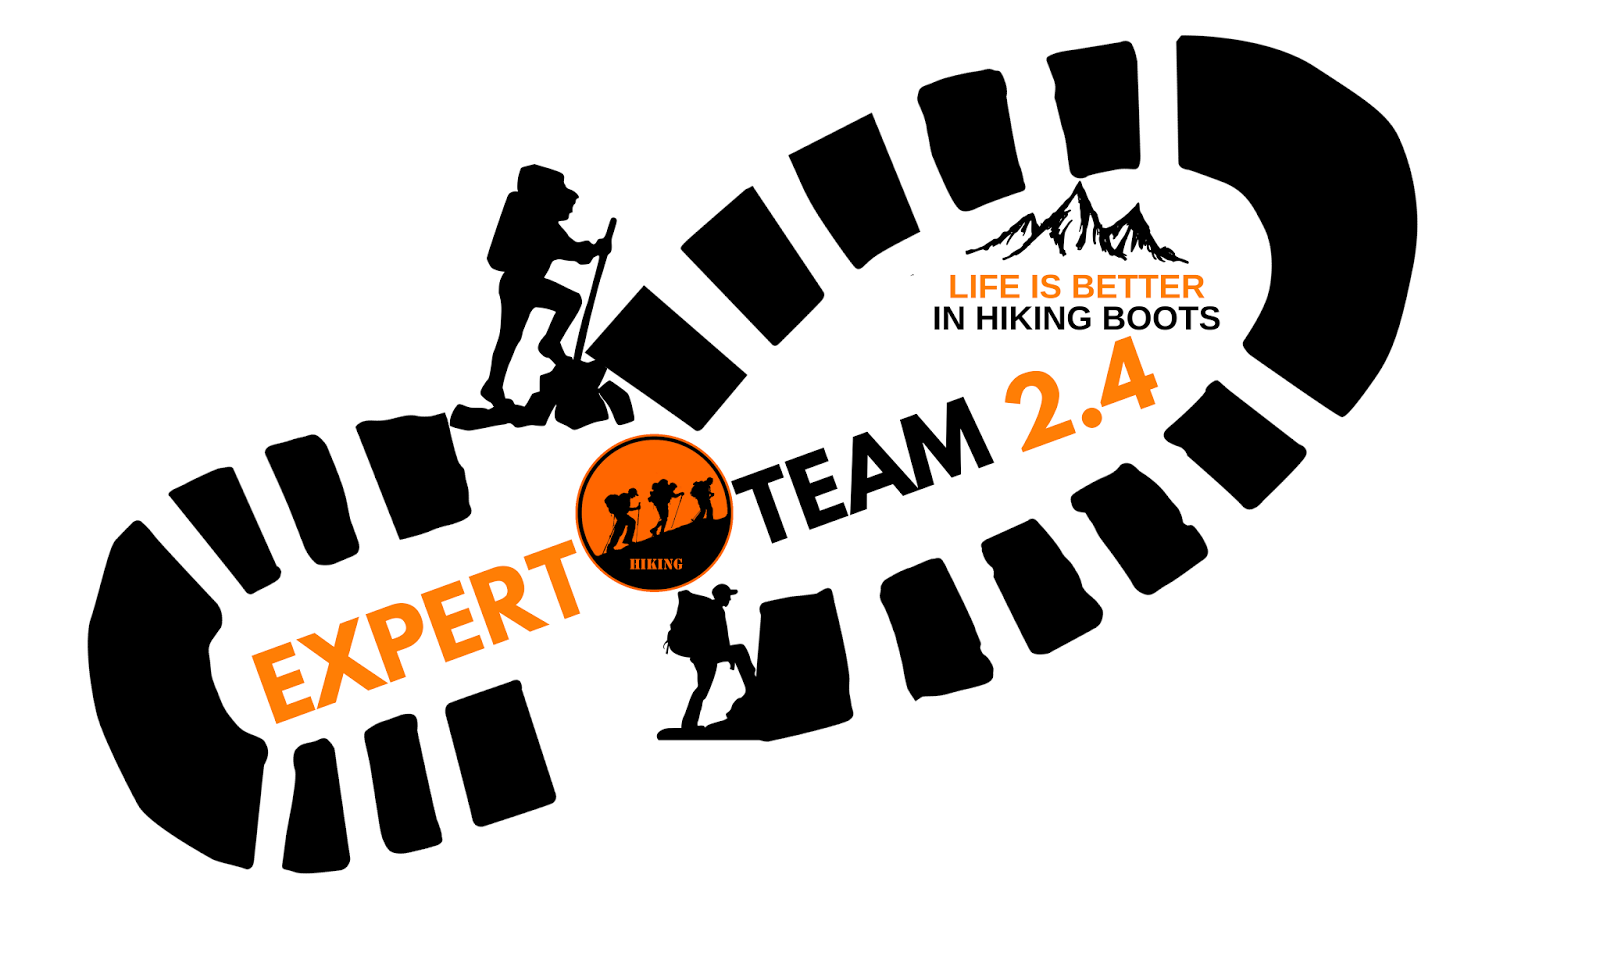 Hiking Logo - Expert Hiking Team 2.4: EXPERT HIKING TEAM 2.4